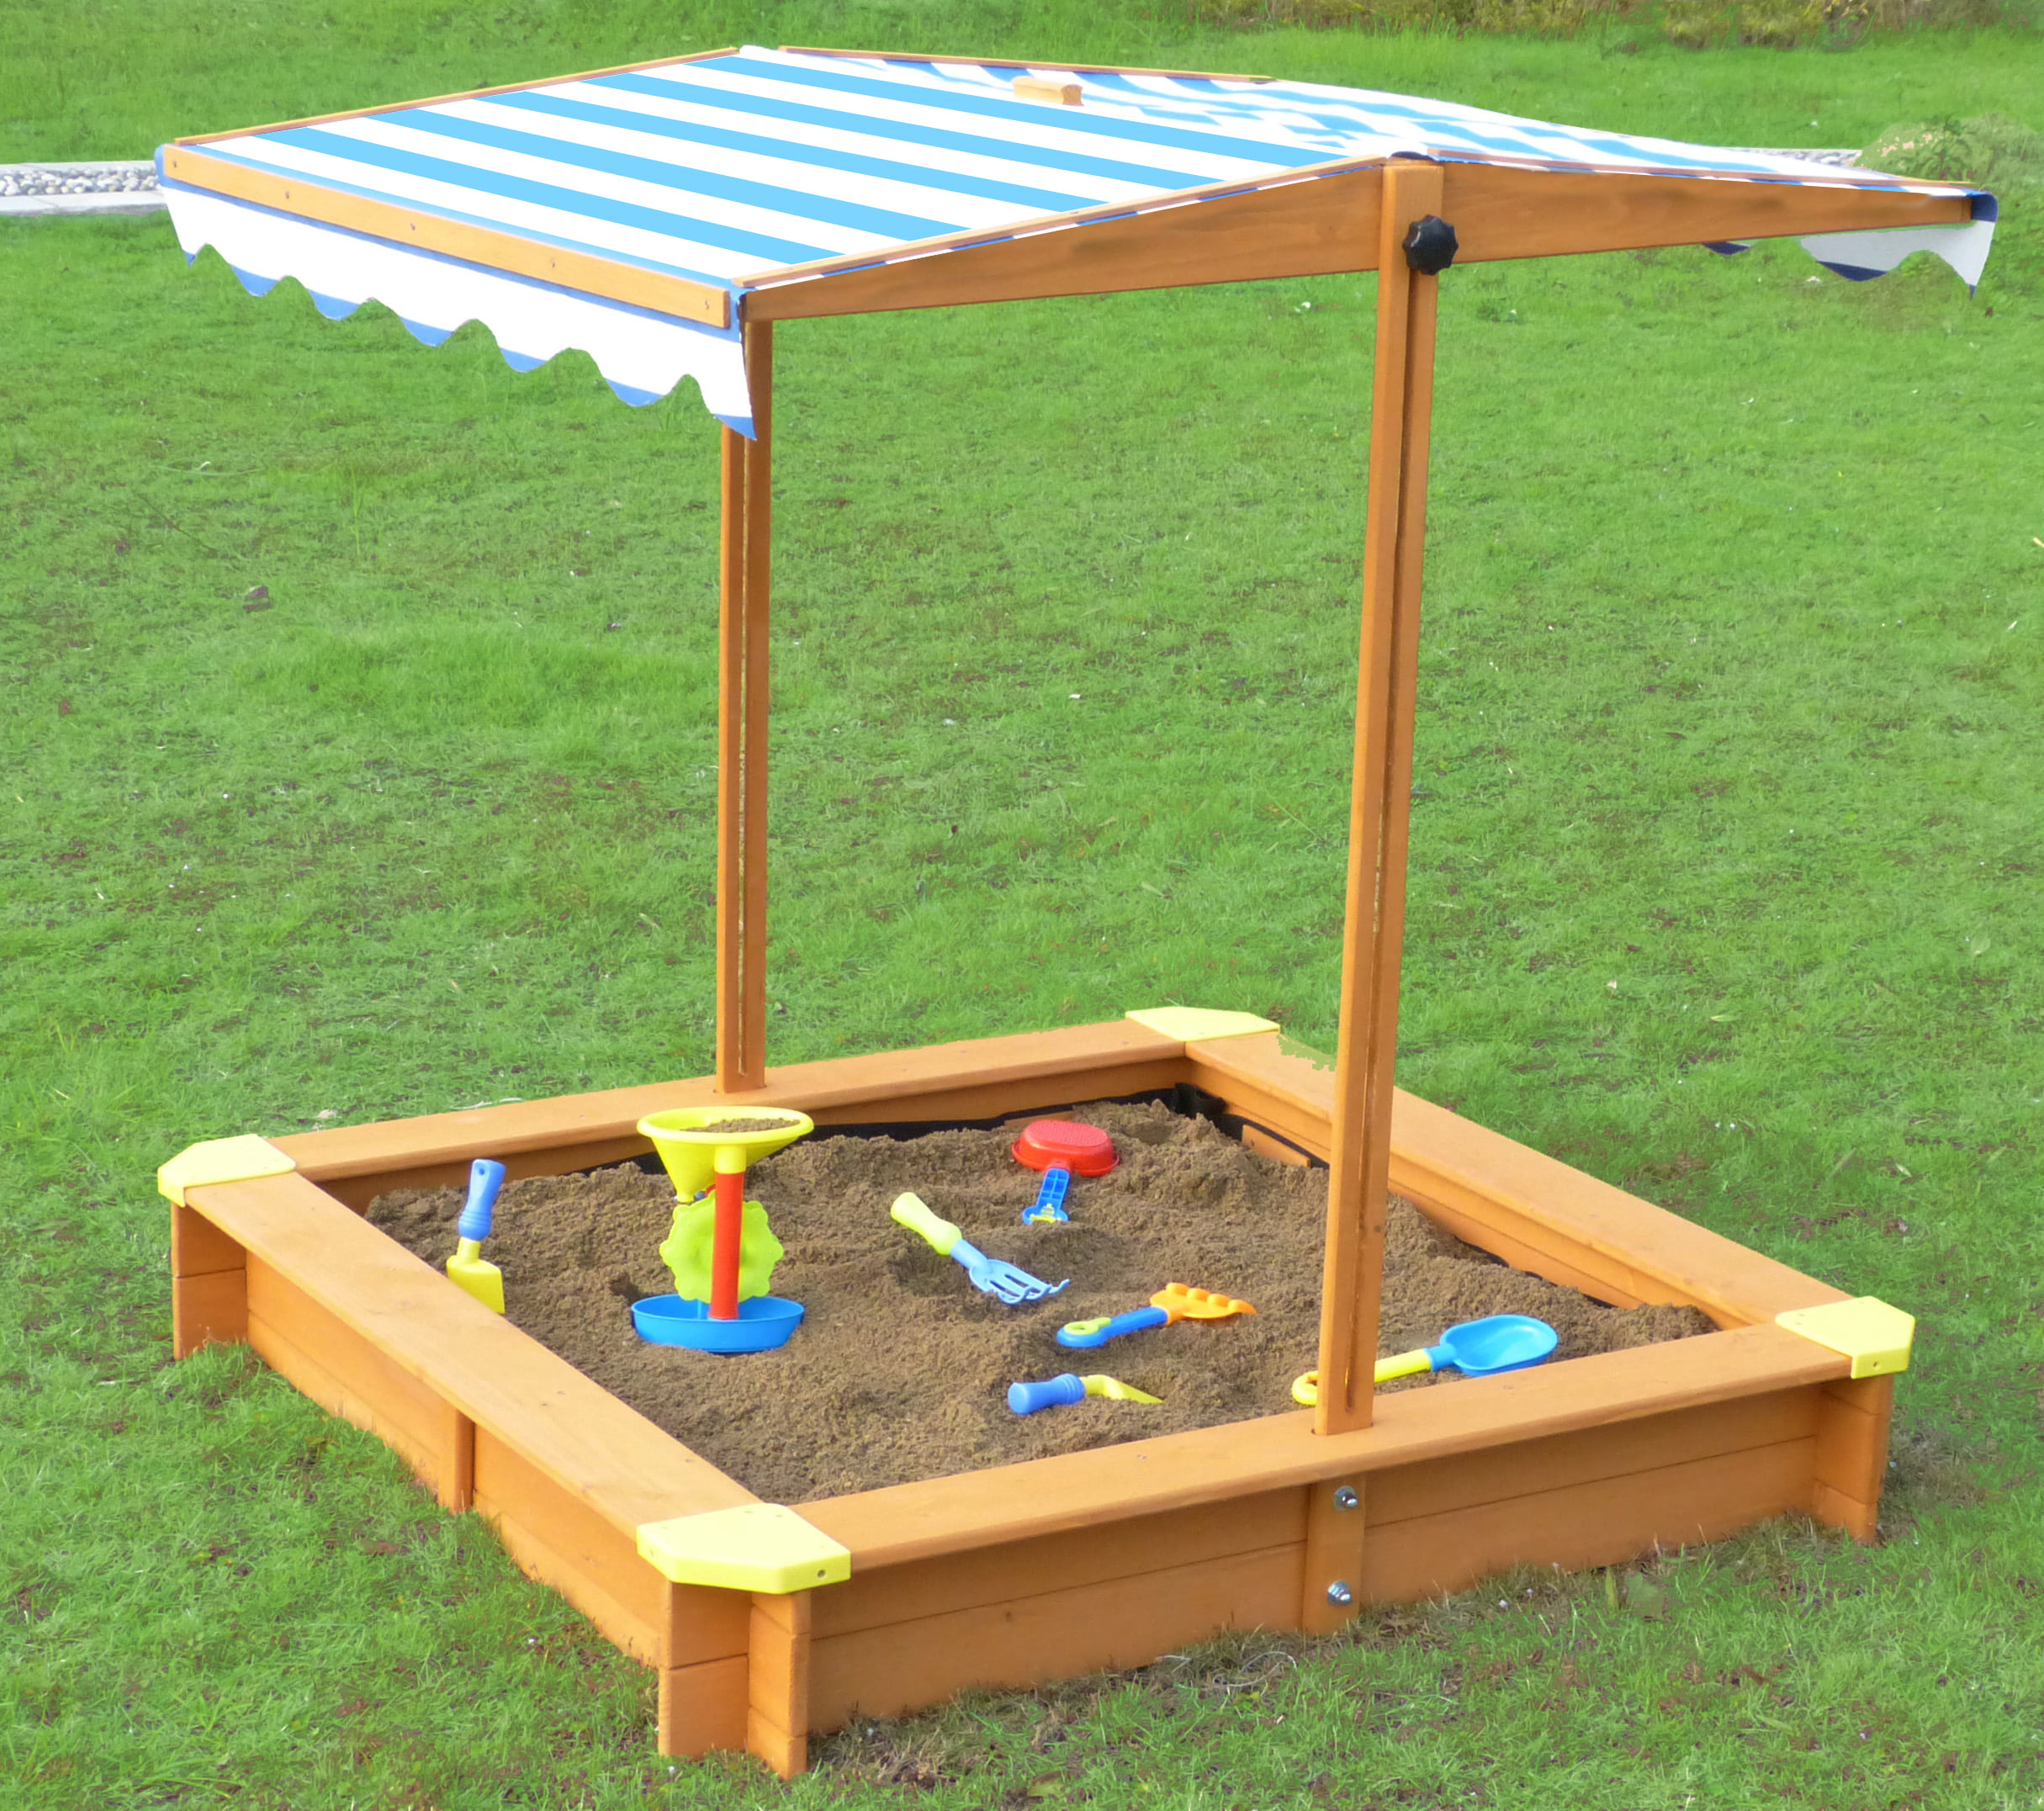 Playtive Junior Sandbox With Canopy